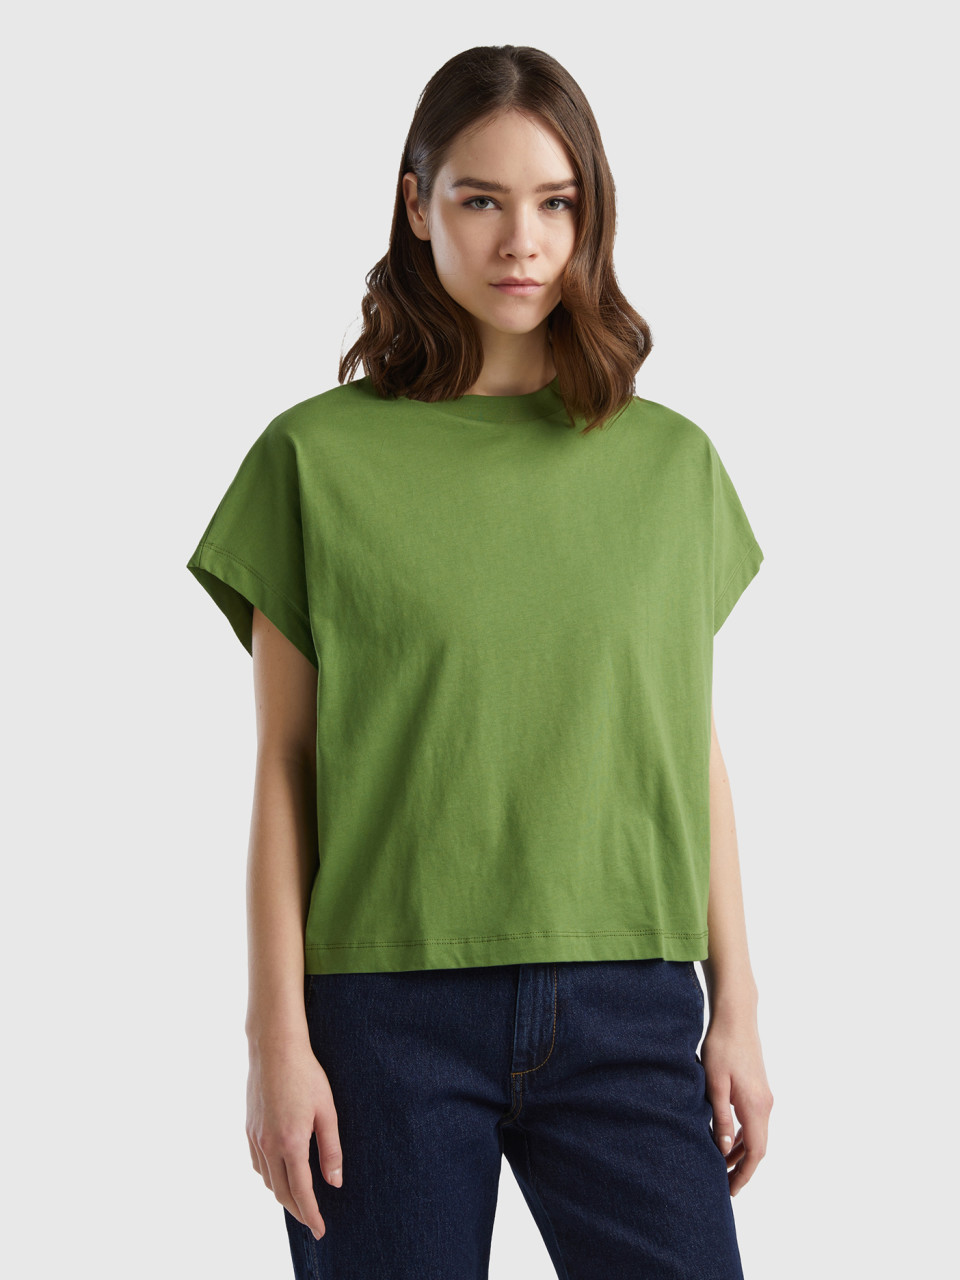 Benetton, Kimono Sleeve T-shirt, Military Green, Women